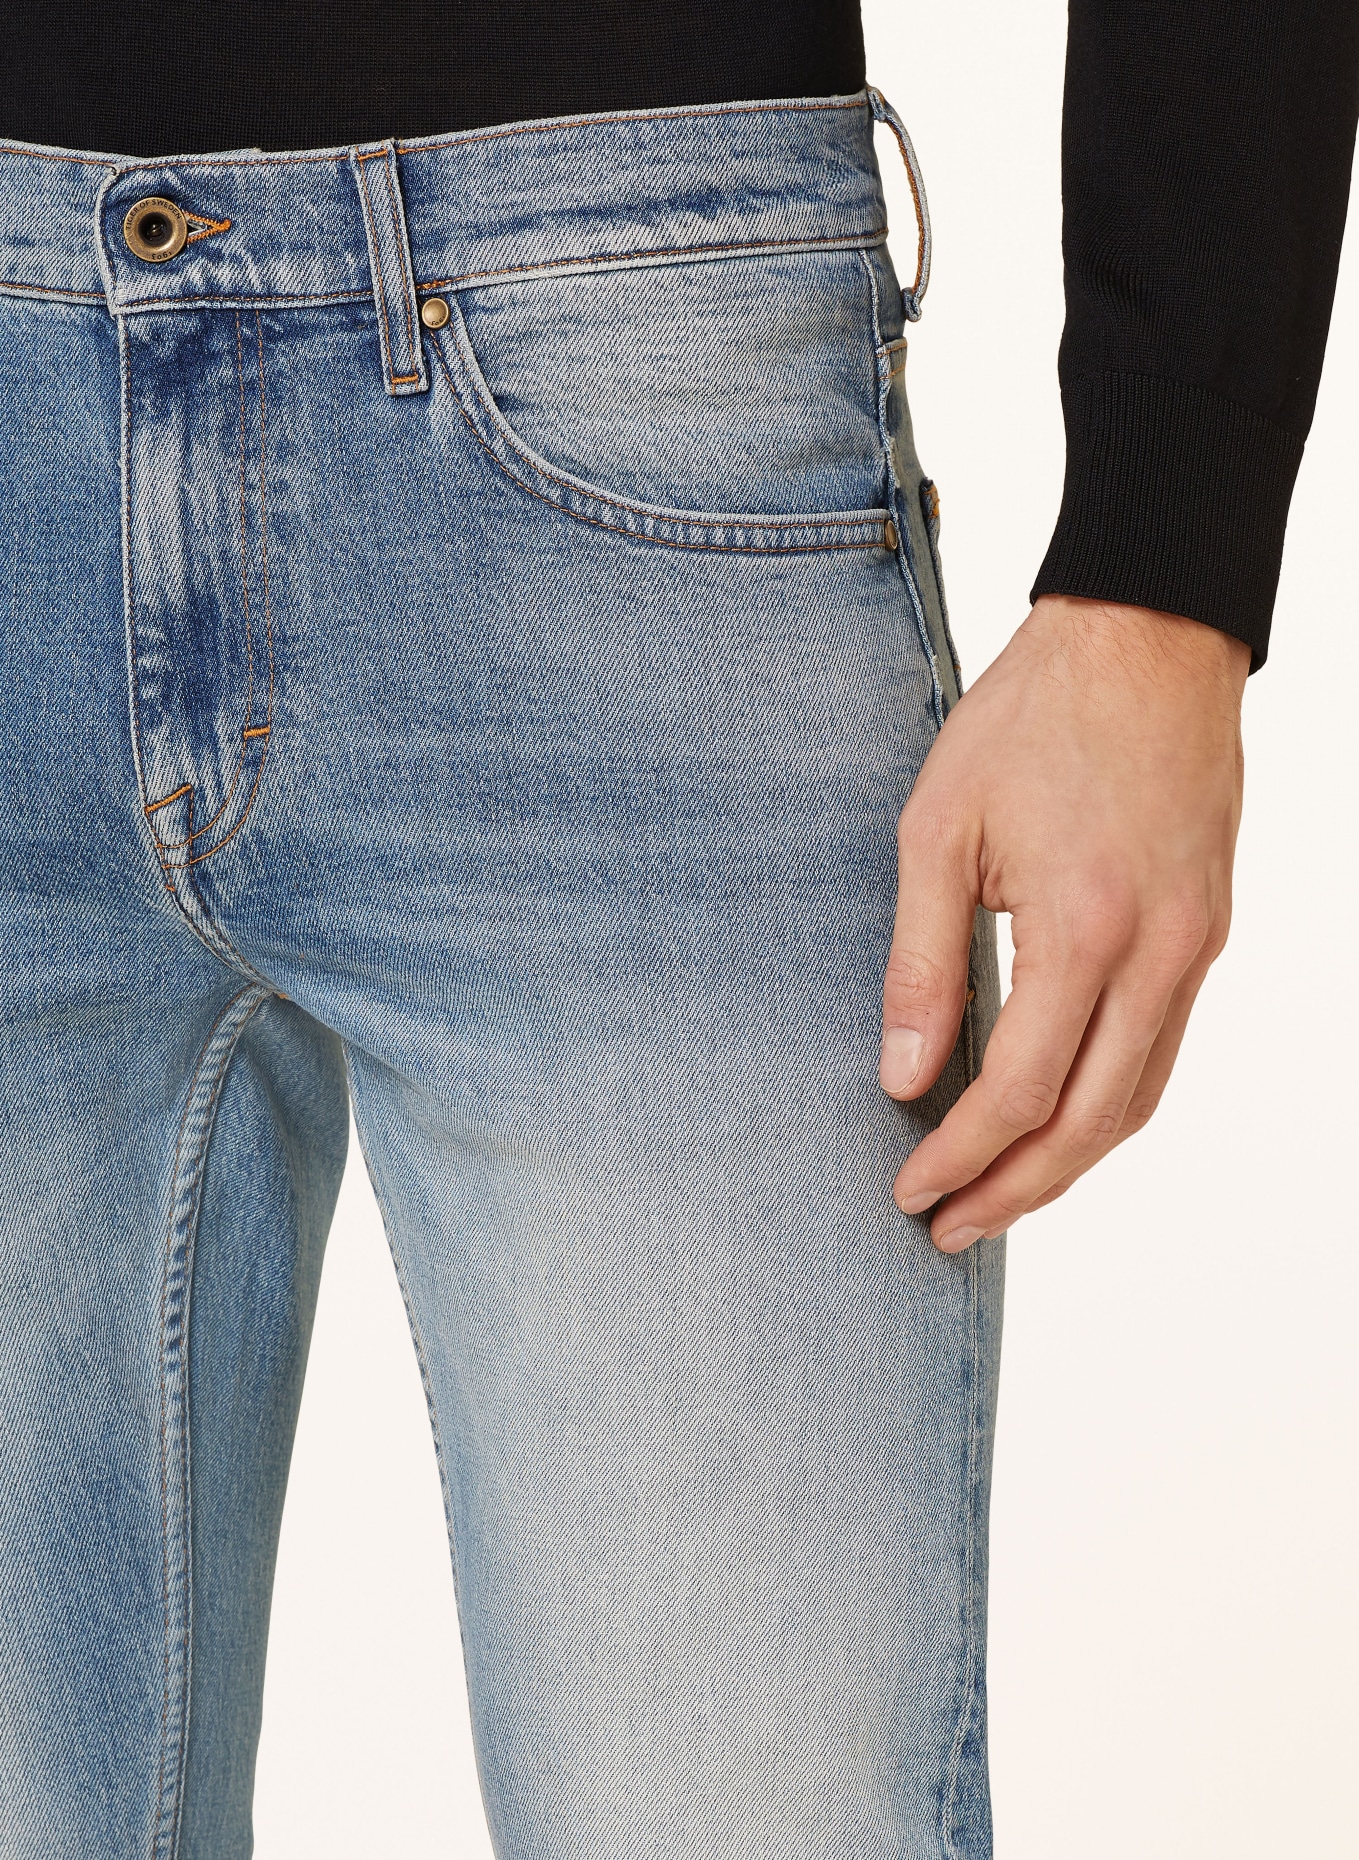 TIGER OF SWEDEN Jeans PISTOLERO Slim Fit, Farbe: 200 Light blue (Bild 5)